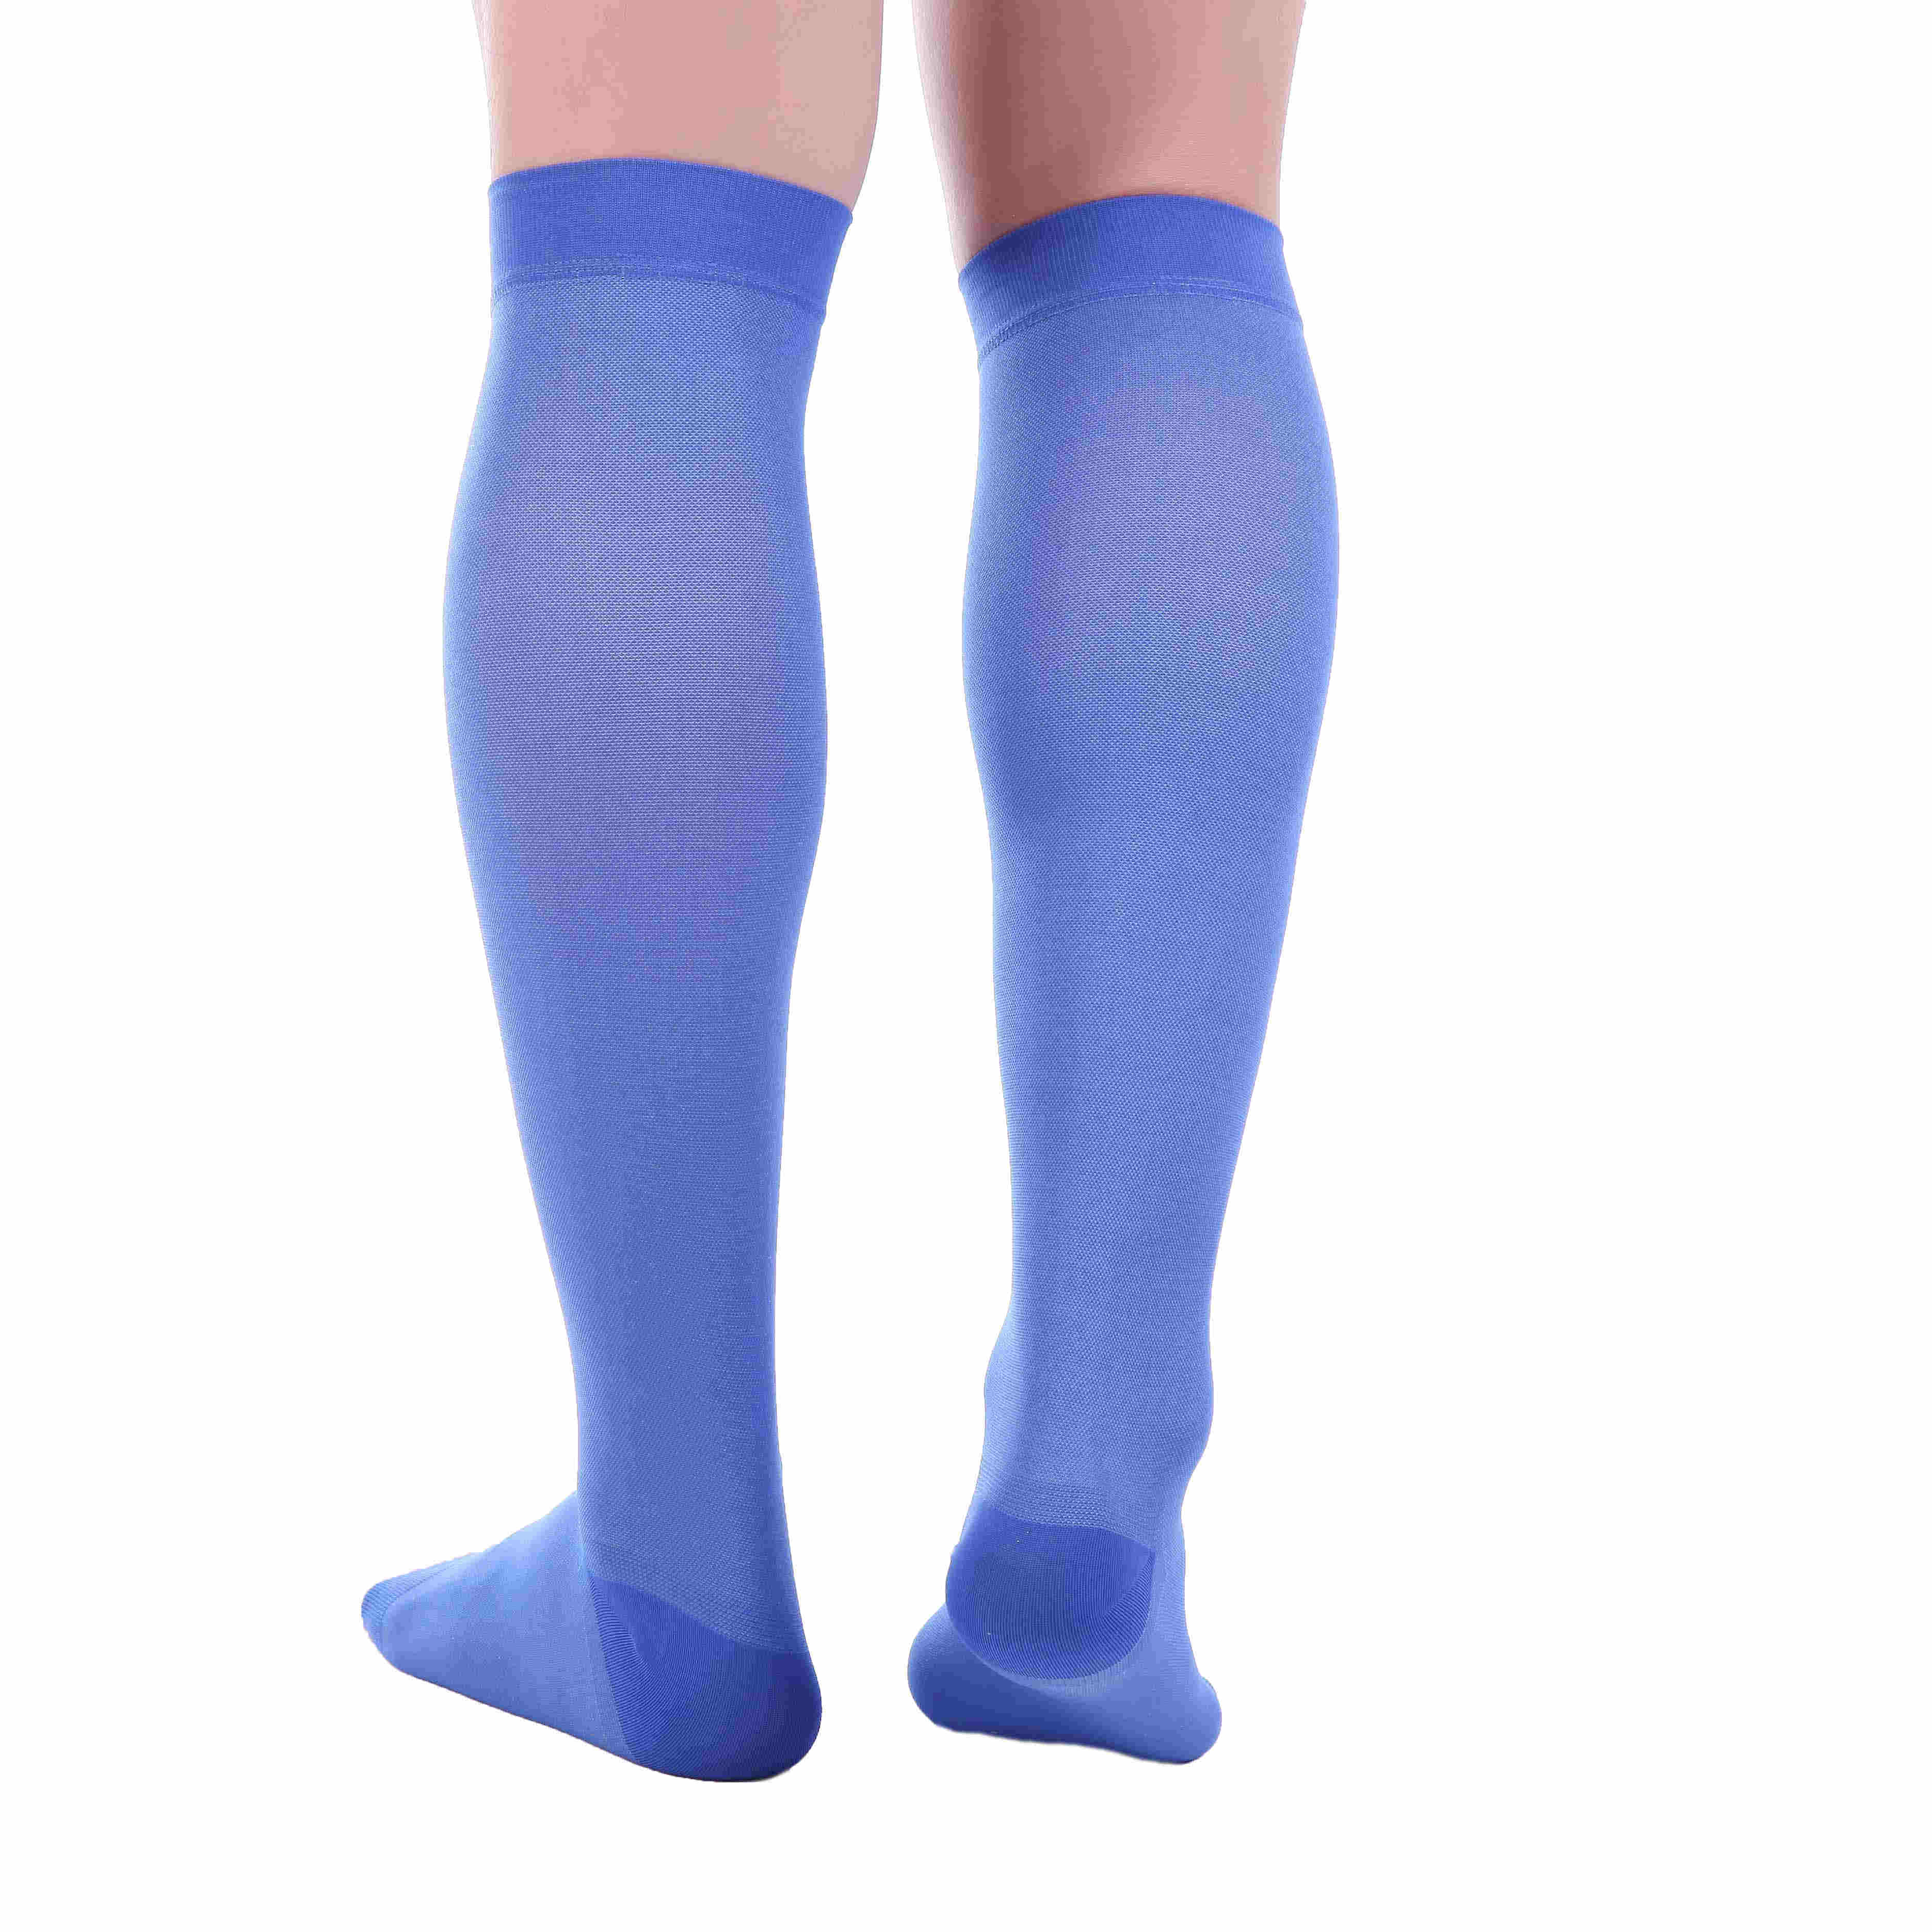 Open Toe Compression Socks 30-40 mmHg BLUE by Doc Miller